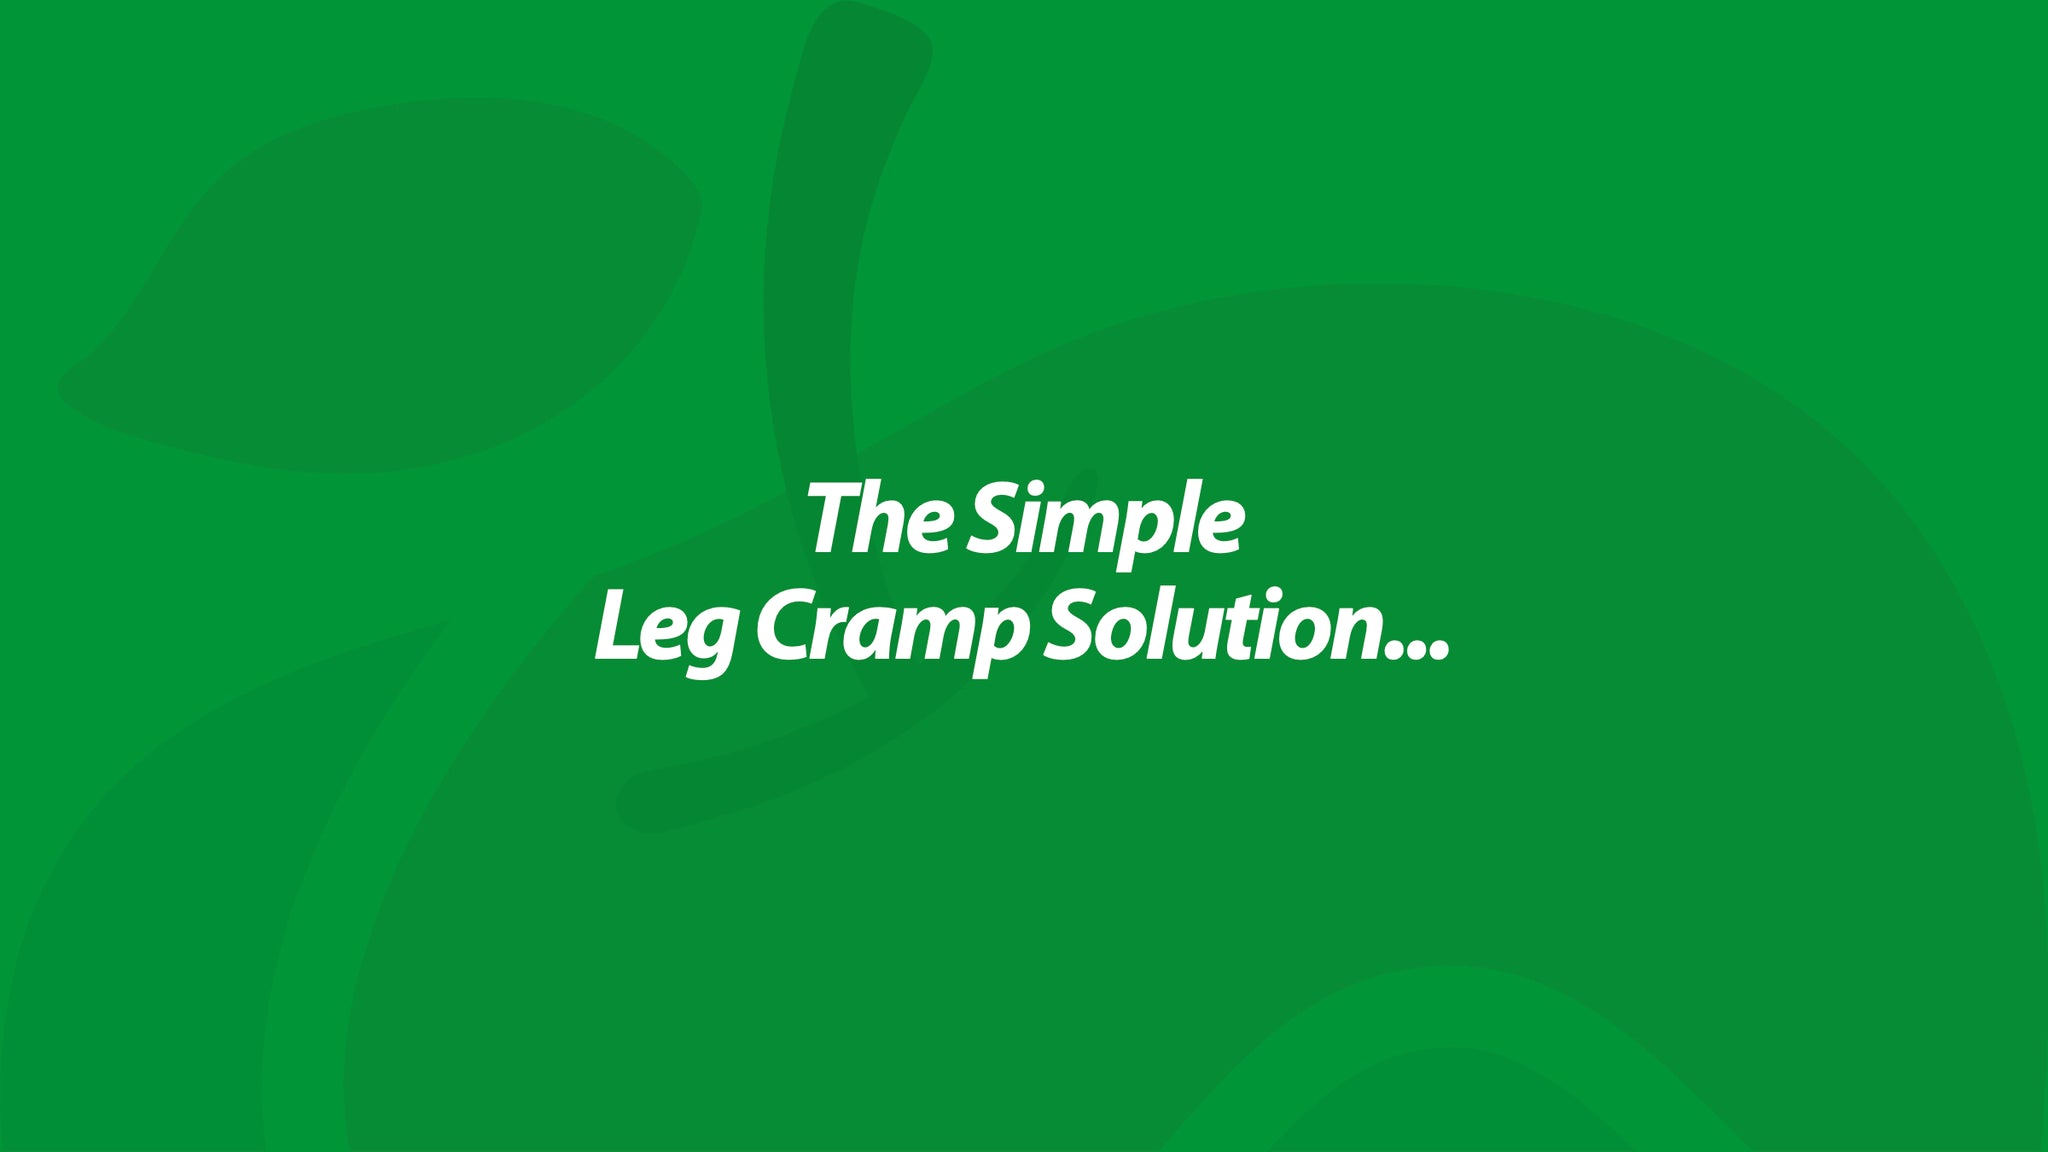 The Simple Leg Cramp Solution...